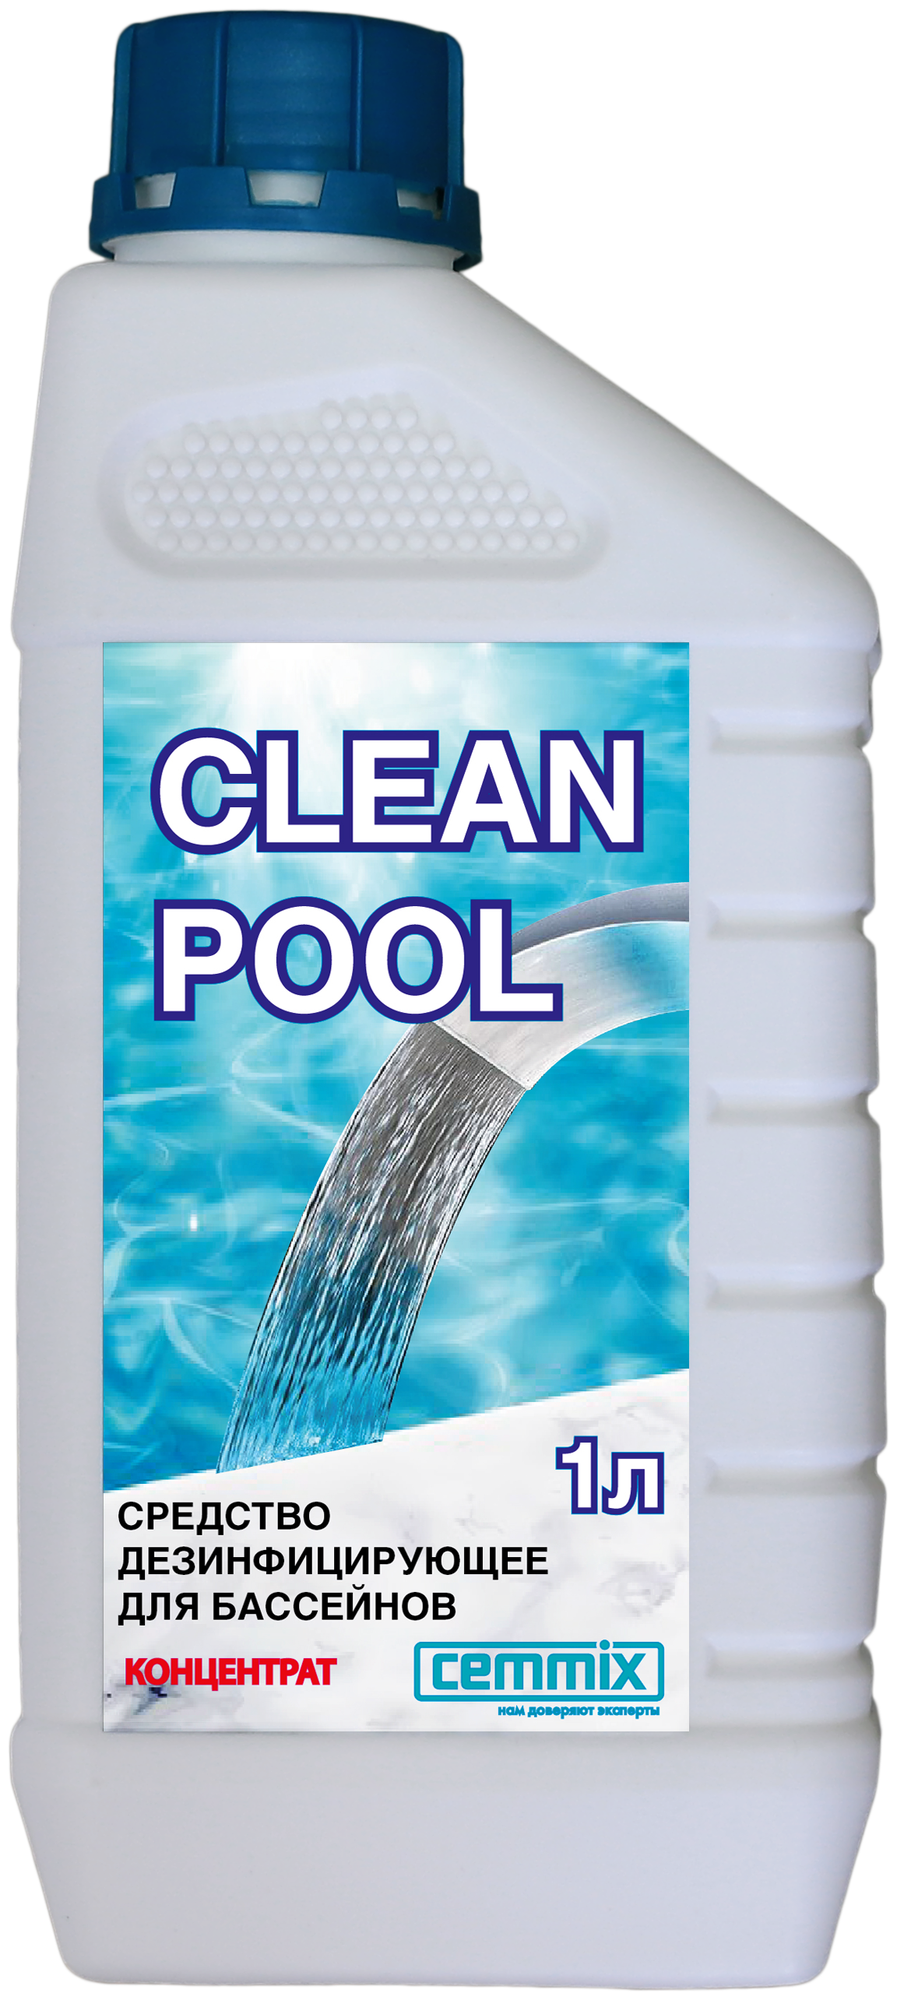 Средство для бассейнов антибактериальное "Clean POOL" Cemmix 1 литр